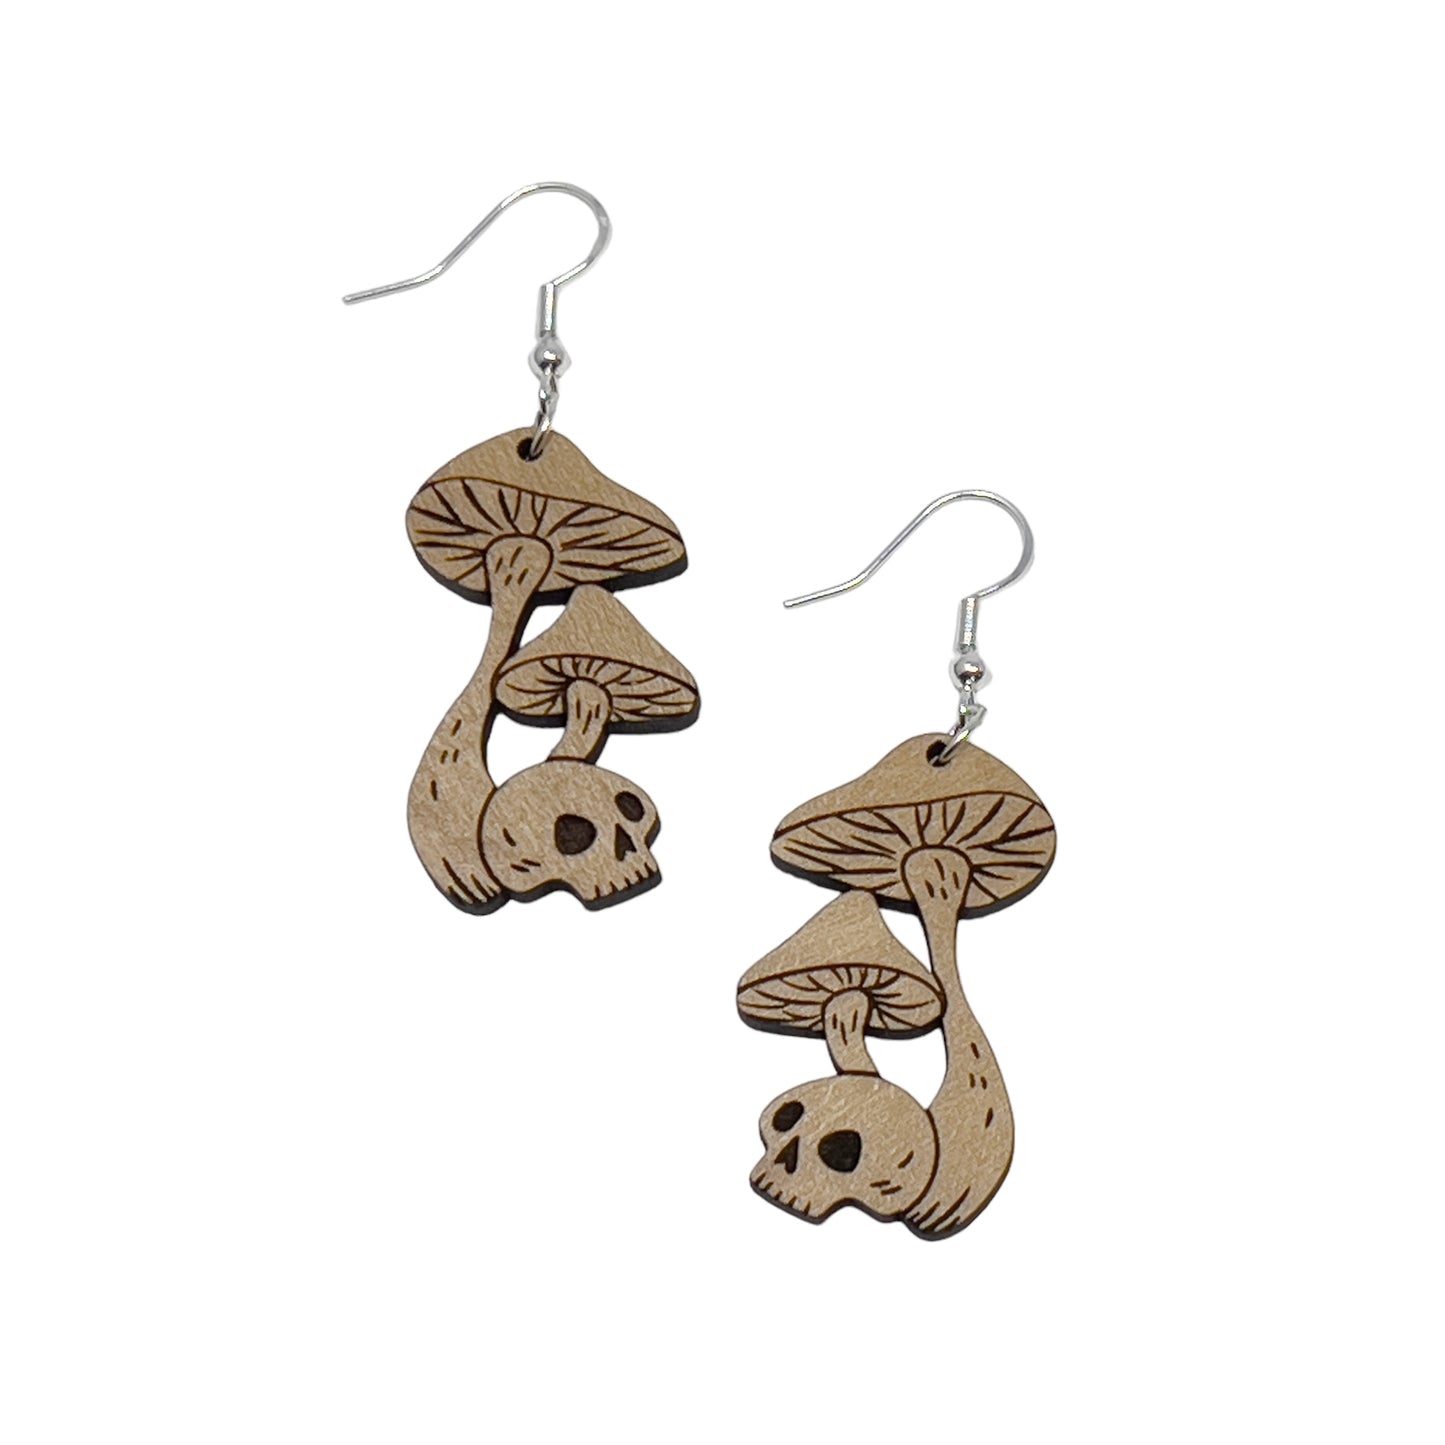 Mushroom Earrings, Rustic Dangle Earrings, Boho Skull Earrings, Cute Nature Earrings, Gothic Wooden Earrings, Country Western Hippie Jewelry